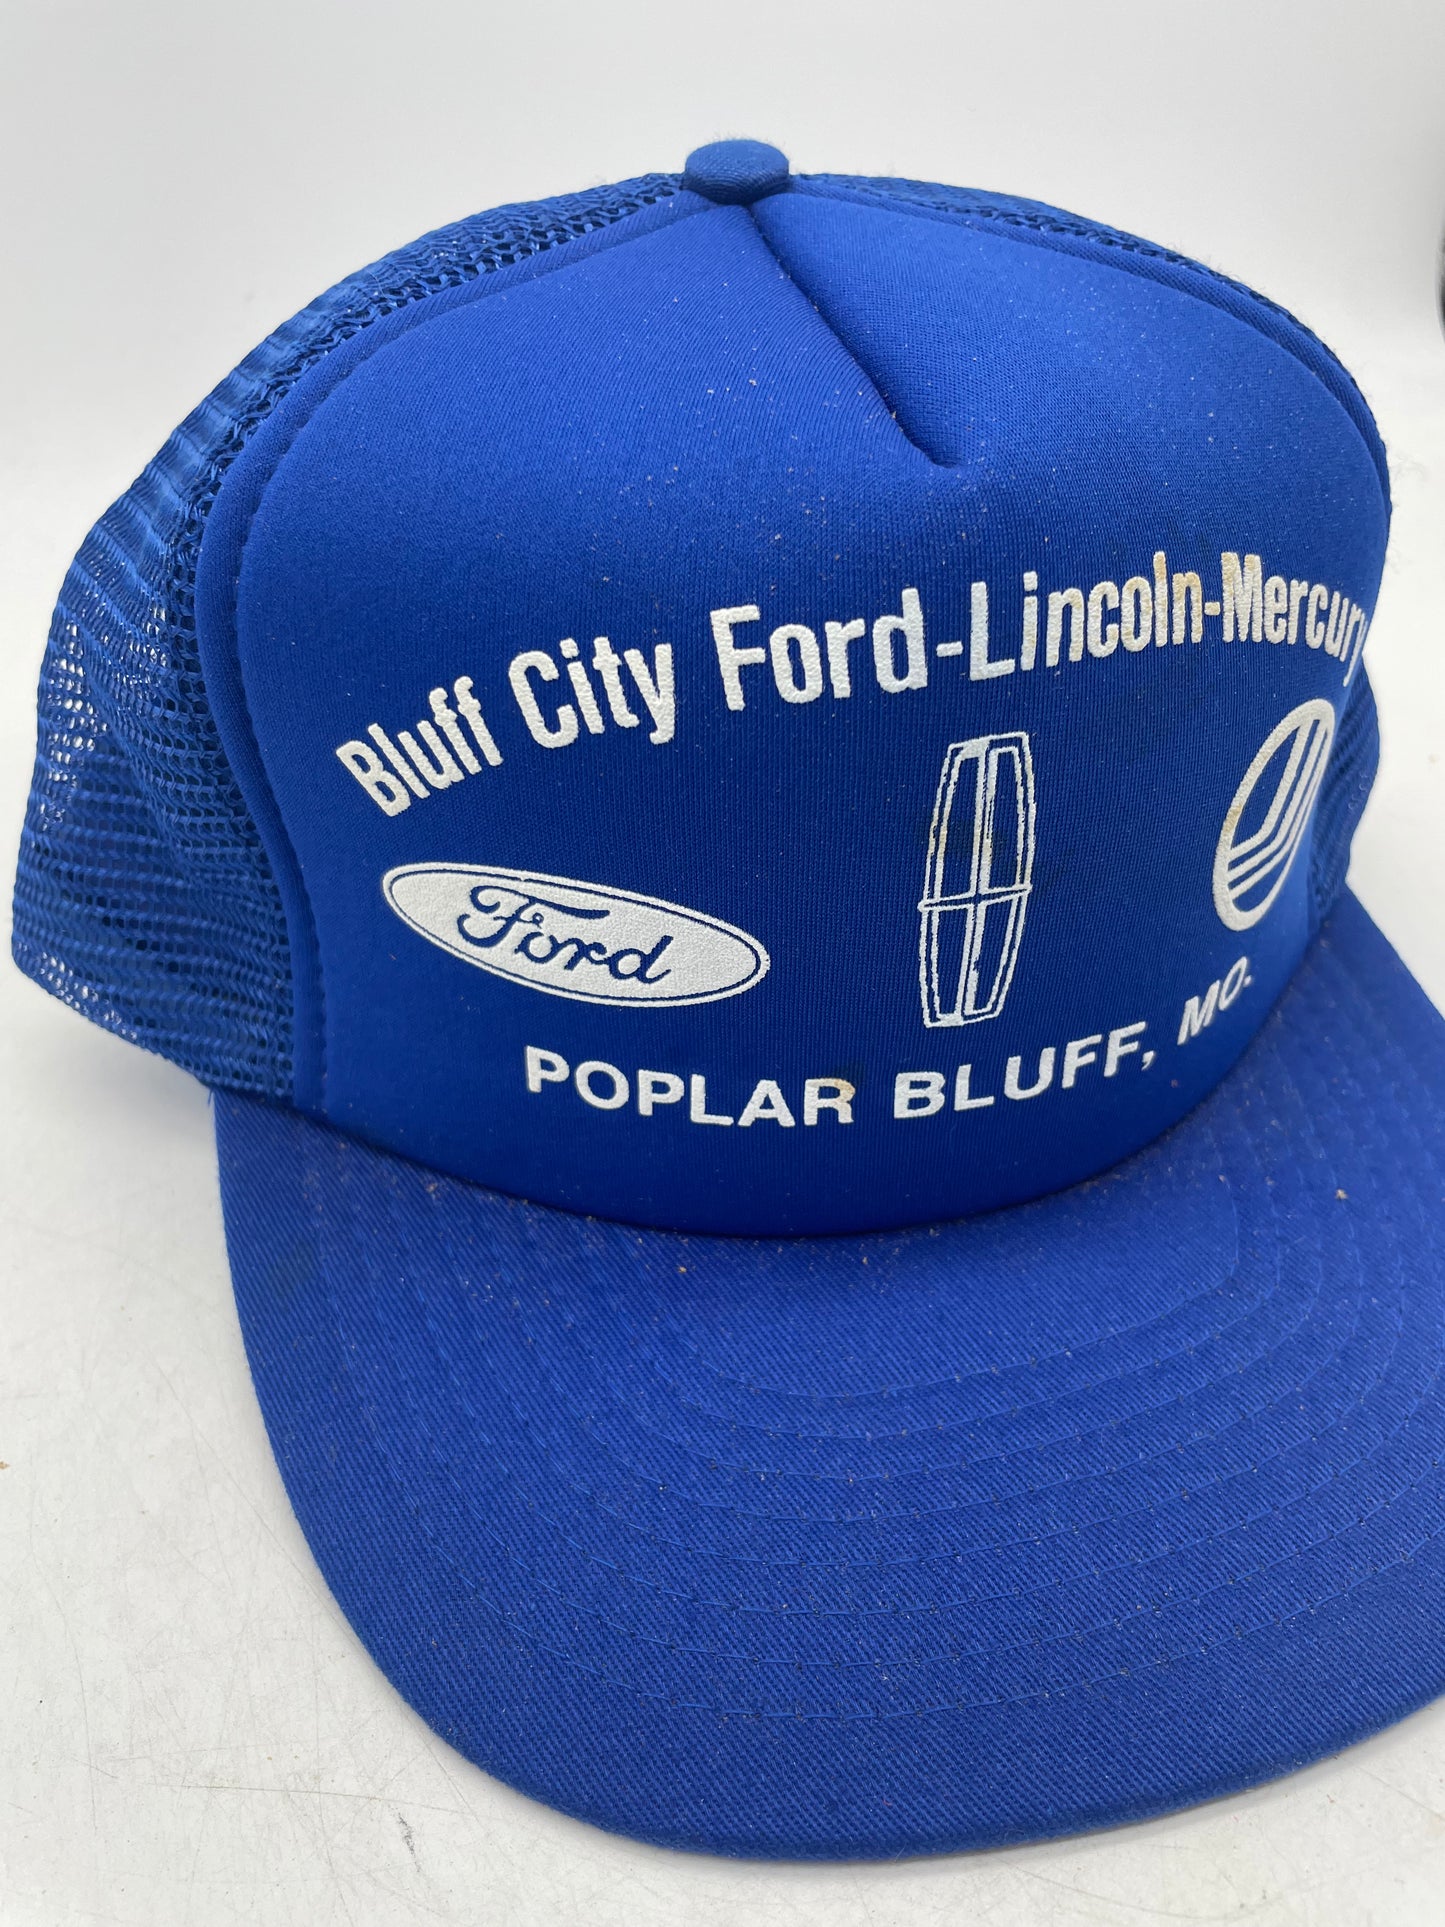 VTG Bluff City Ford-Lincoln-Mercury Trucker Hat